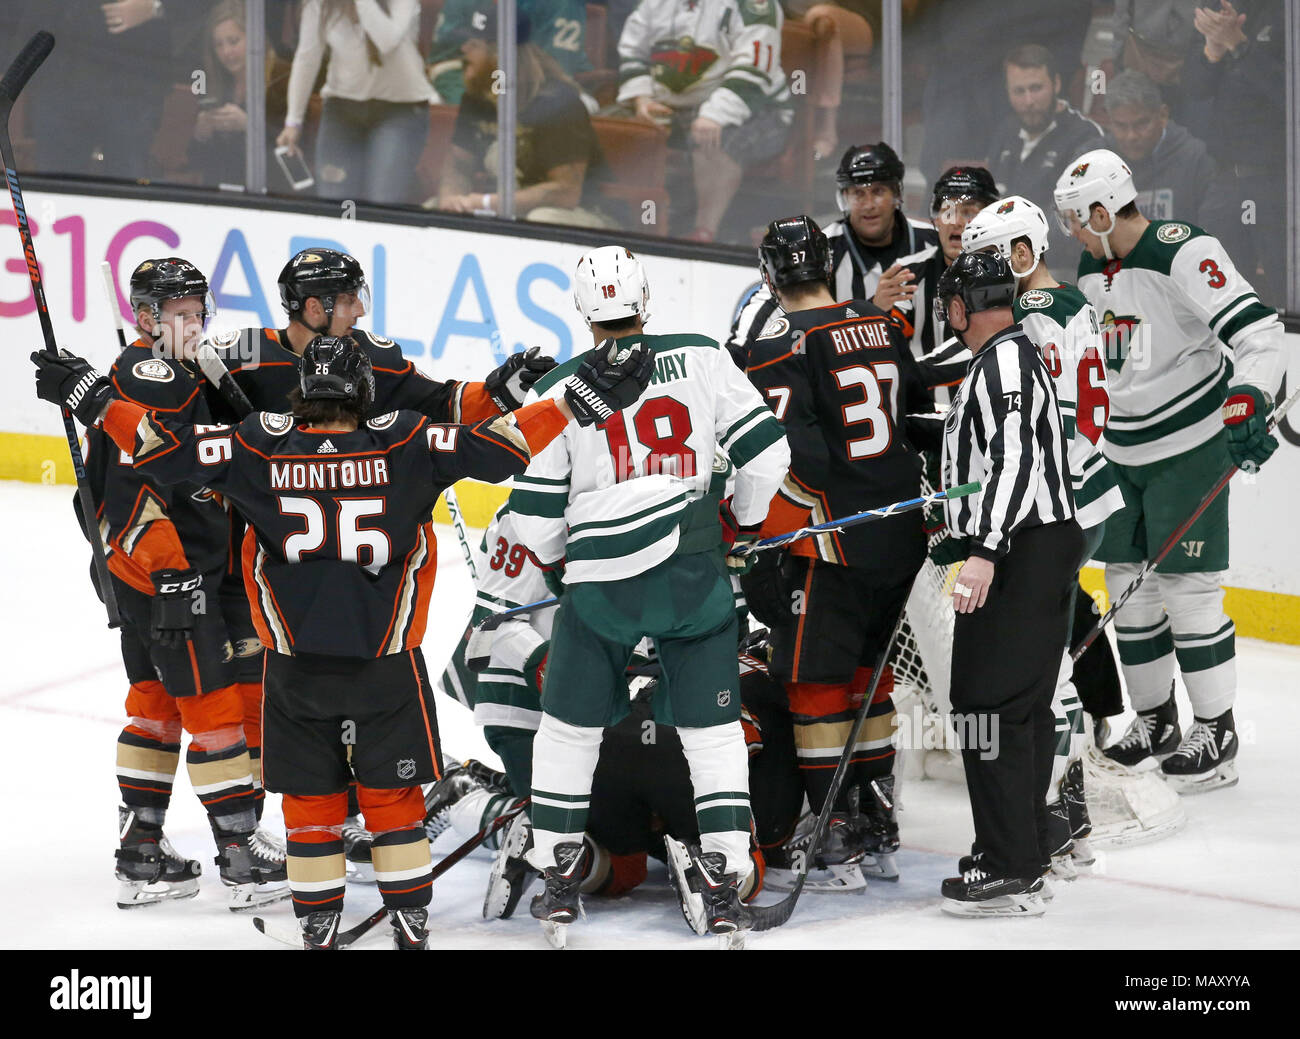 Minnesota wild hockey hi-res stock photography and images - Alamy